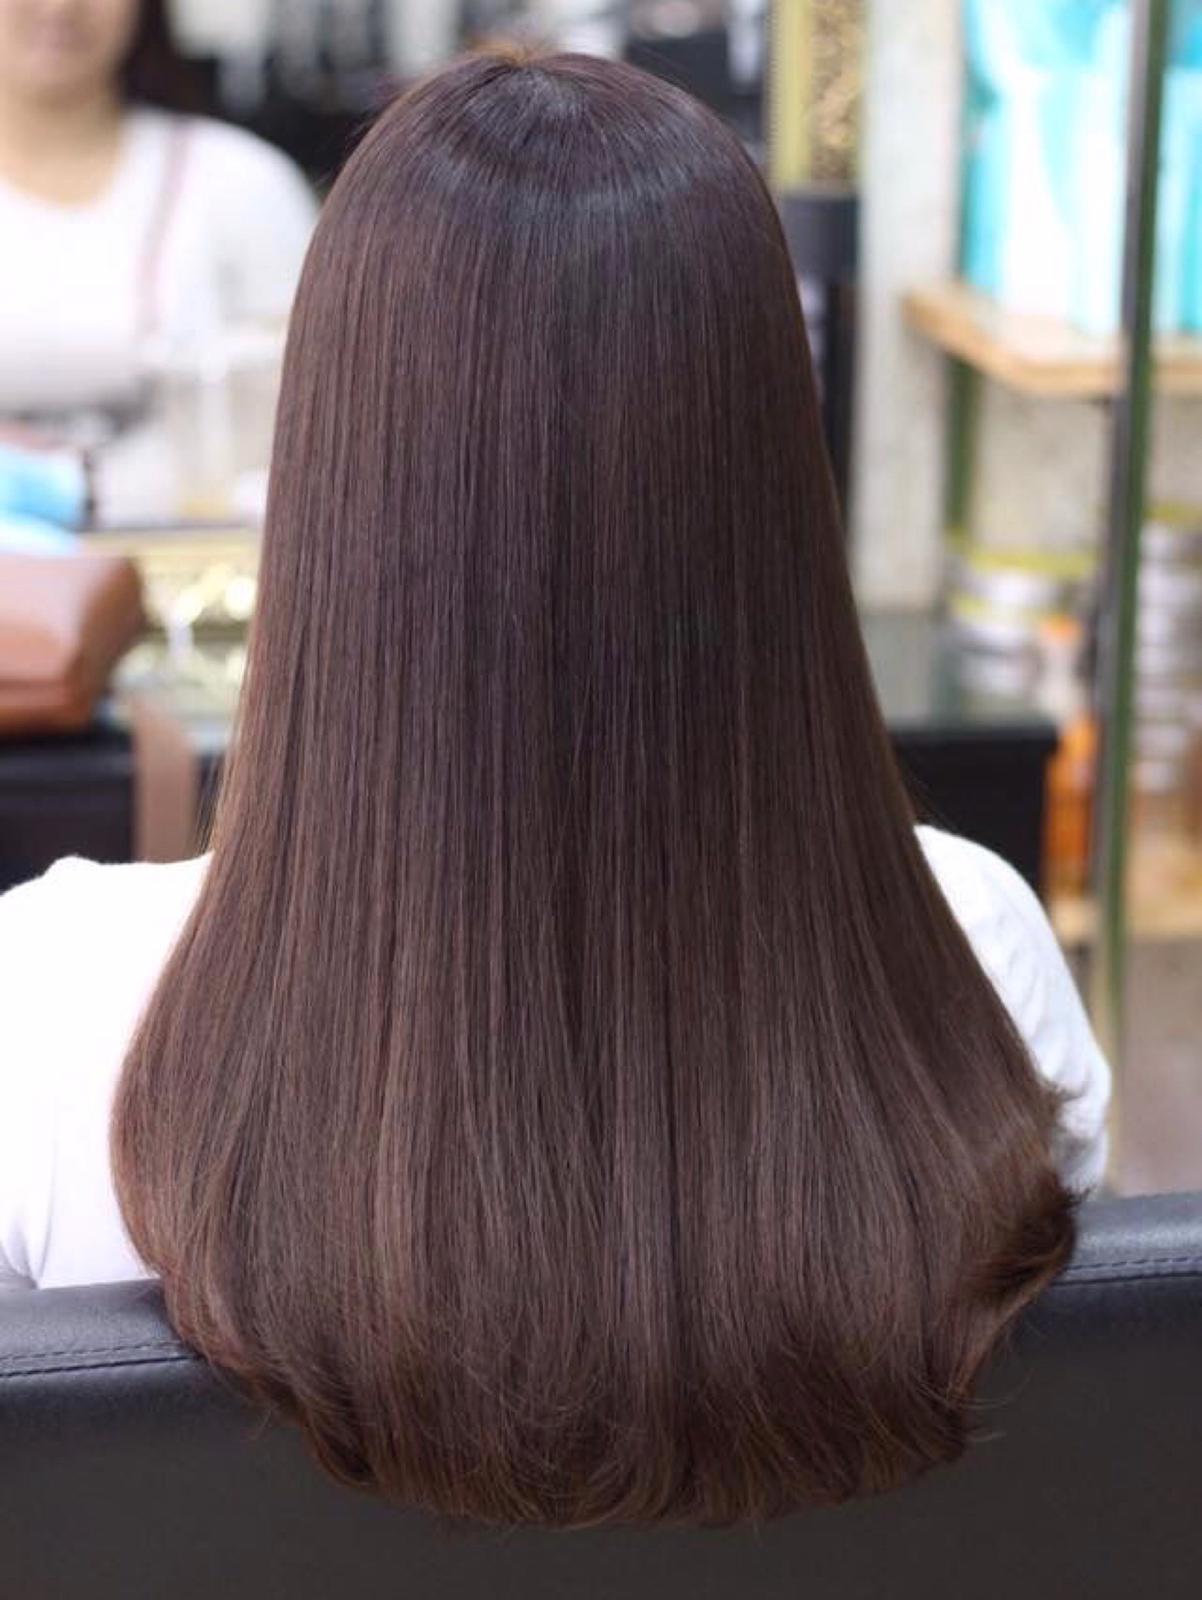  I do Hair ®之髮型作品: 日本溶濟PAIMORE 直髮療程